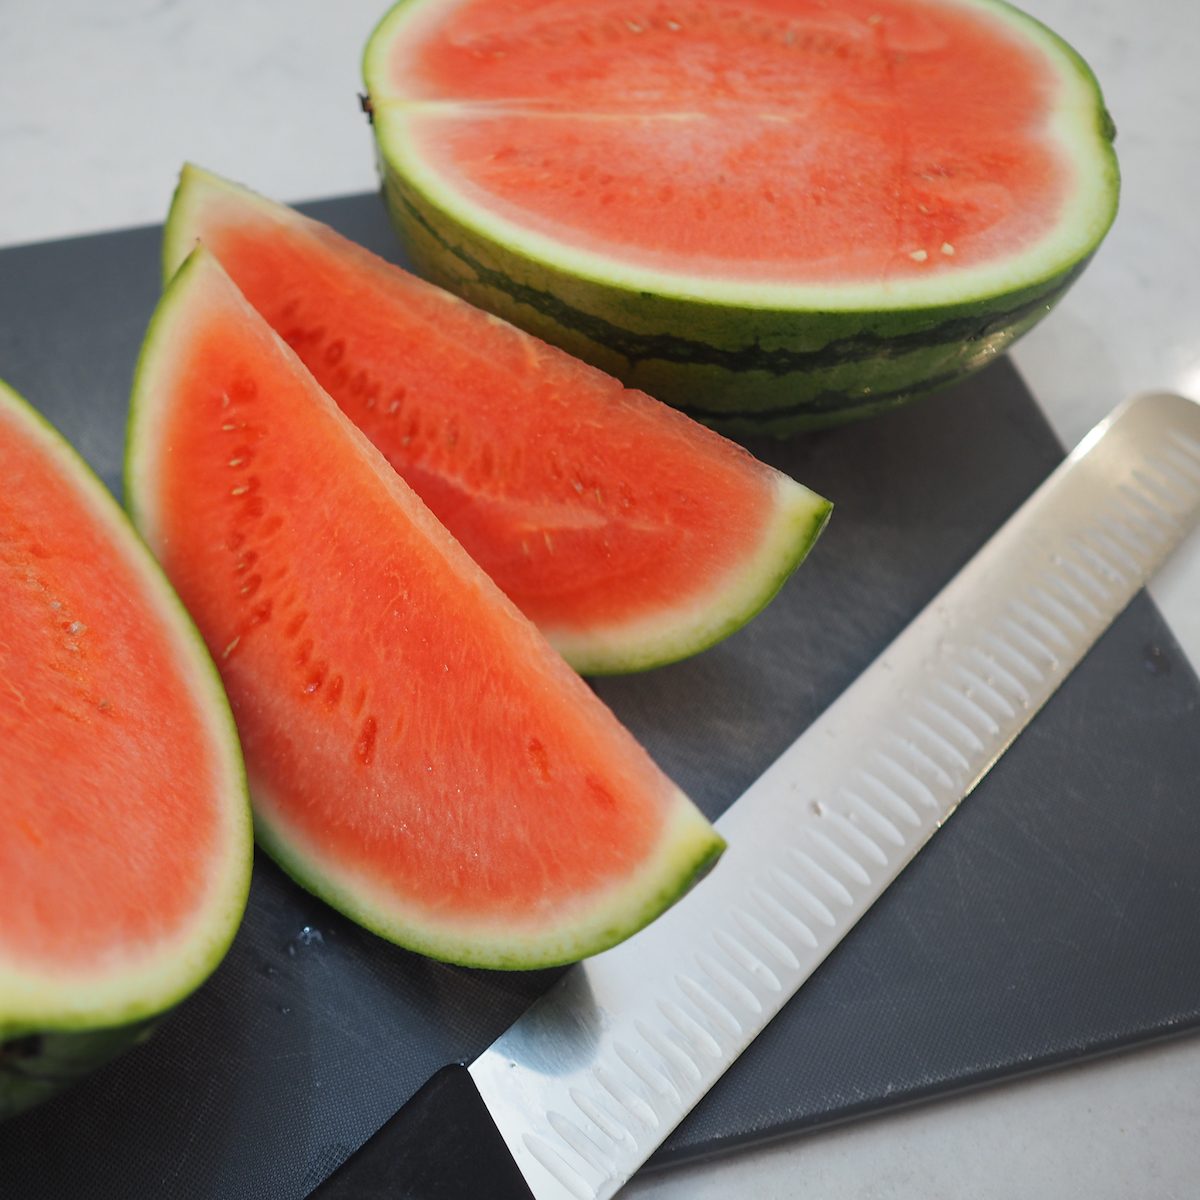 Cut watermelon (halves, half, quarter), watermelon slices, sliced watermelon